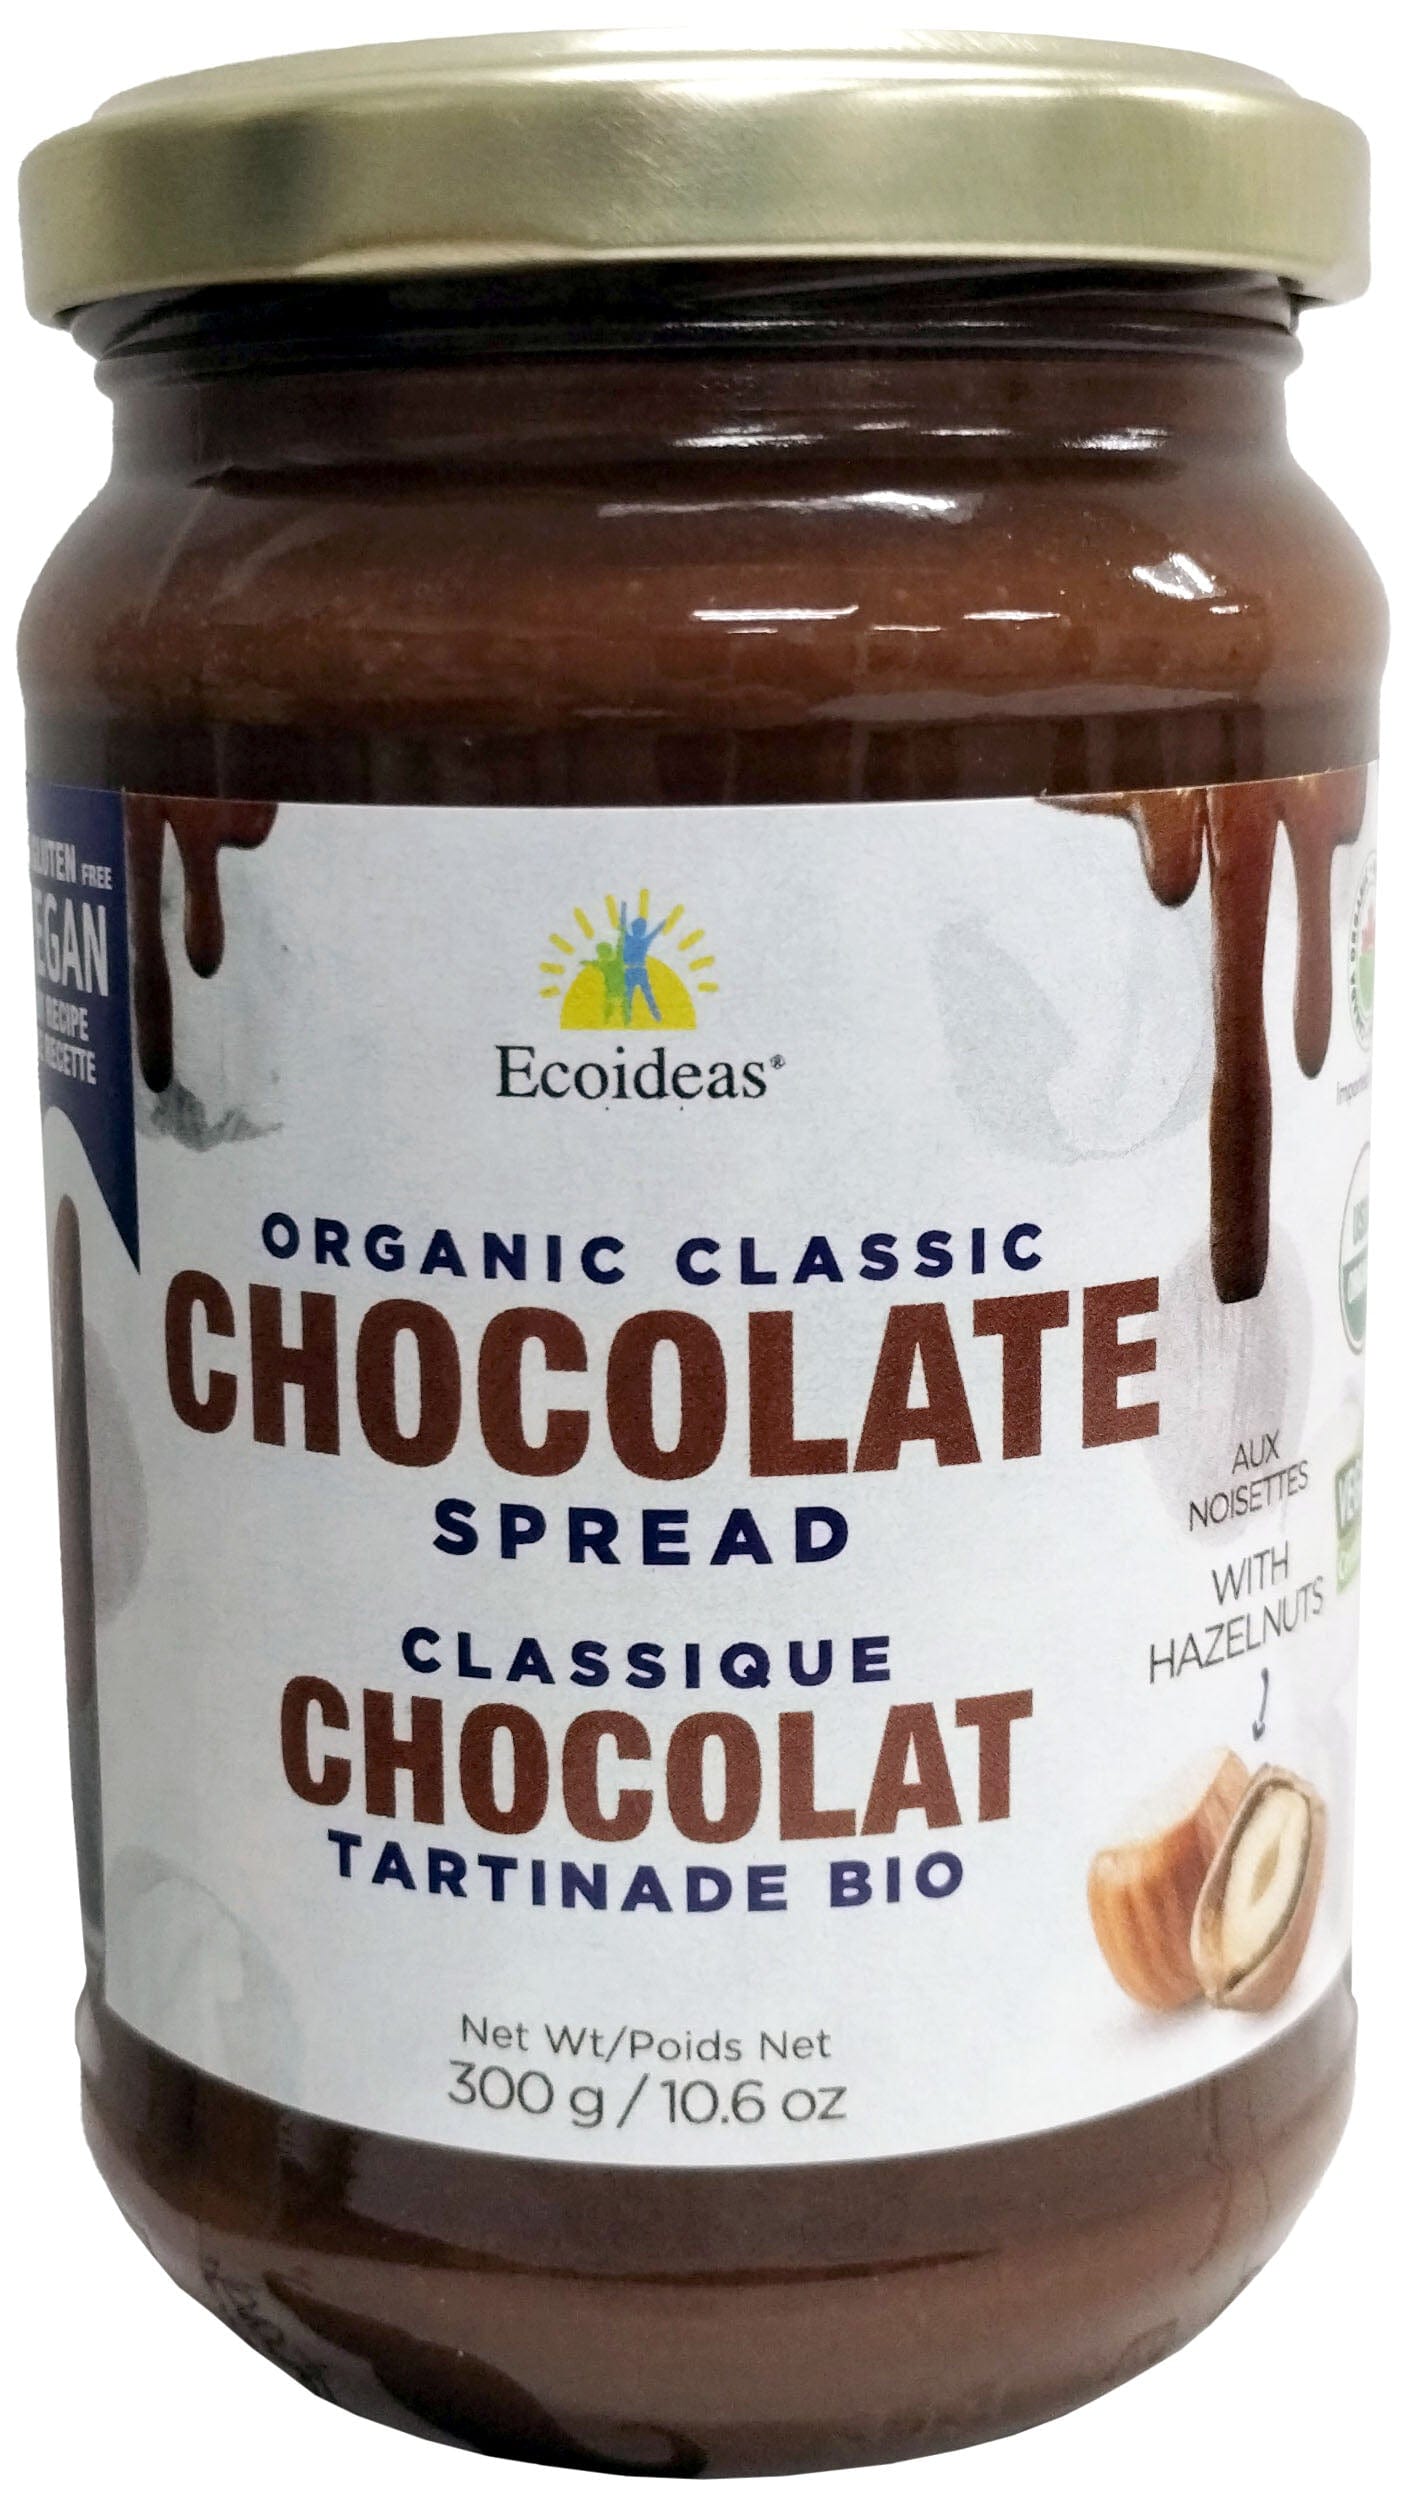 ECOIDEAS Épicerie Tartinade chocolat classique bio 300g